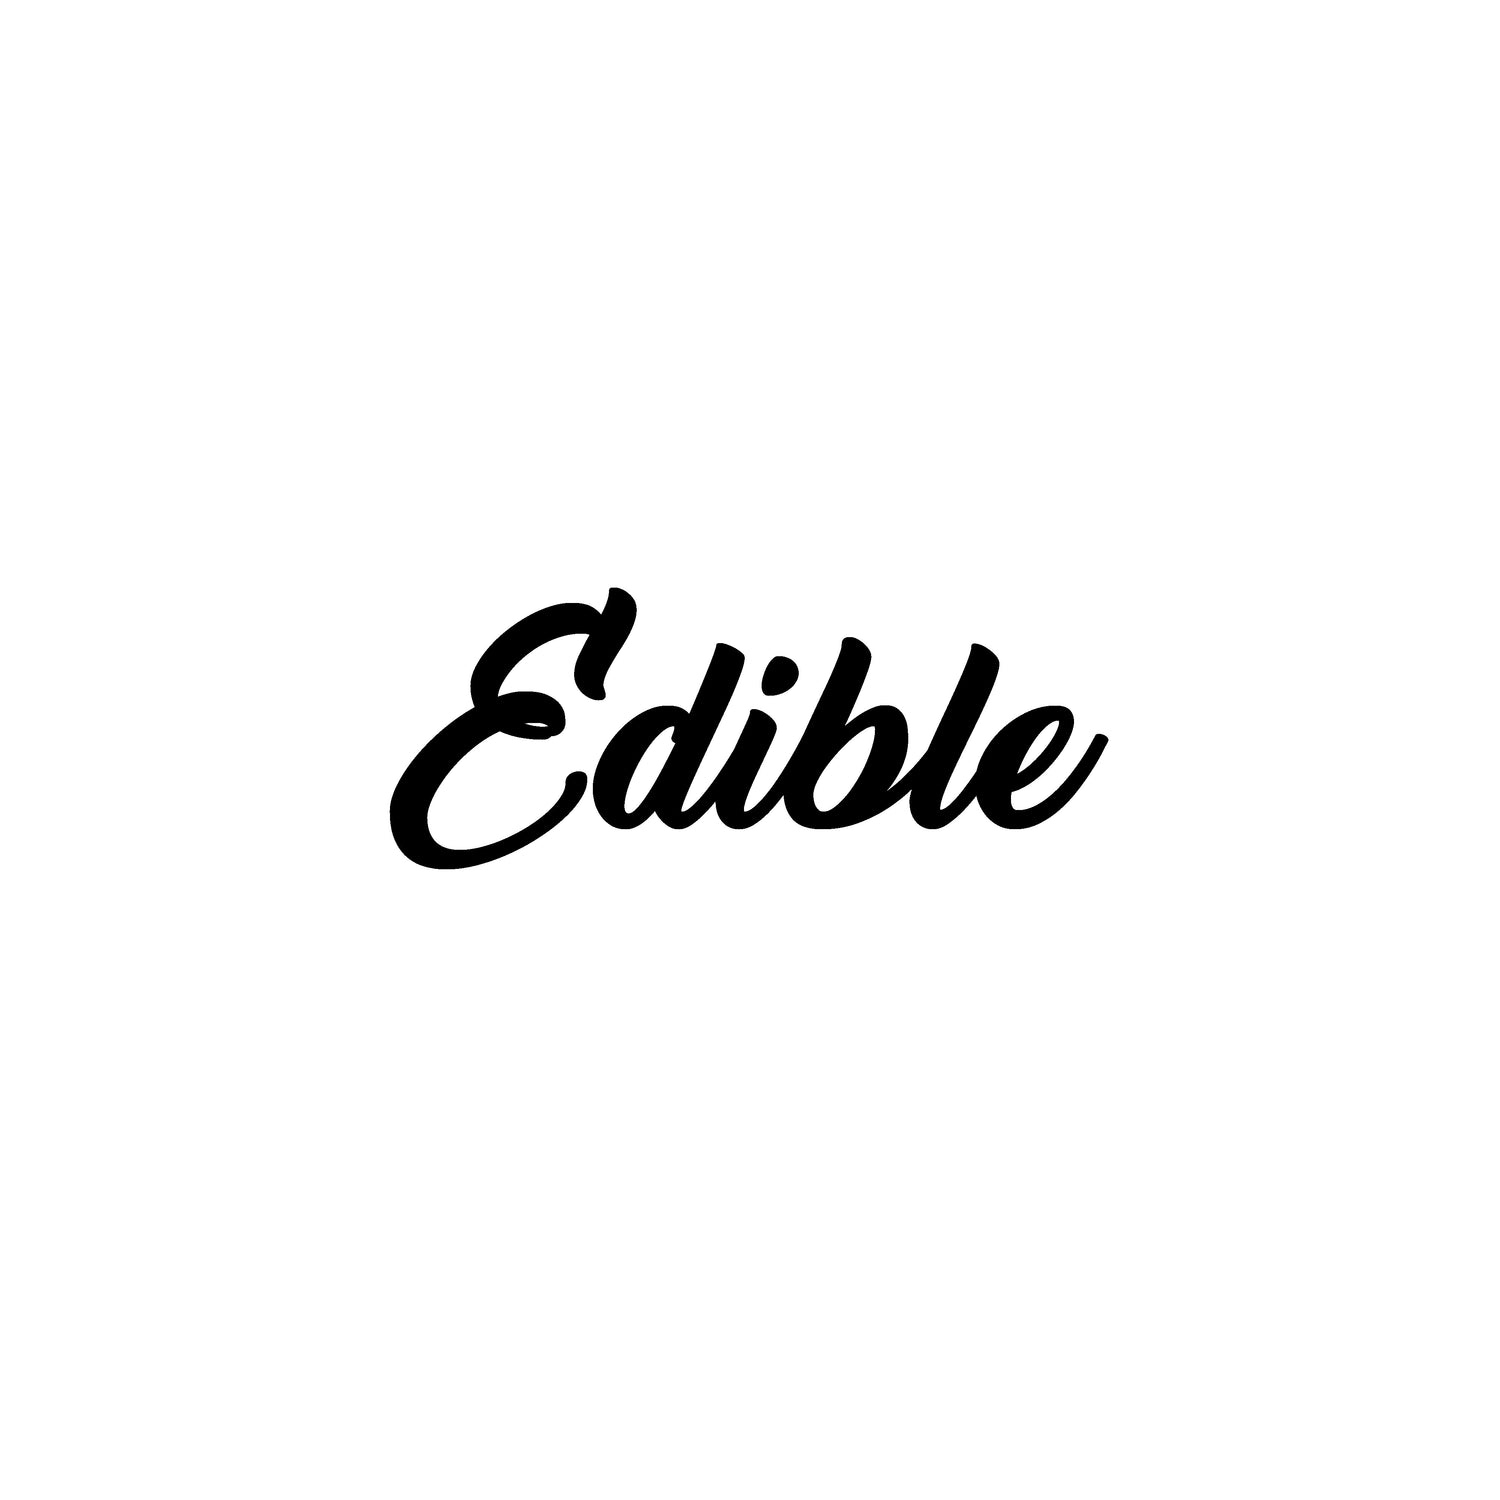 The "Edible" Collection